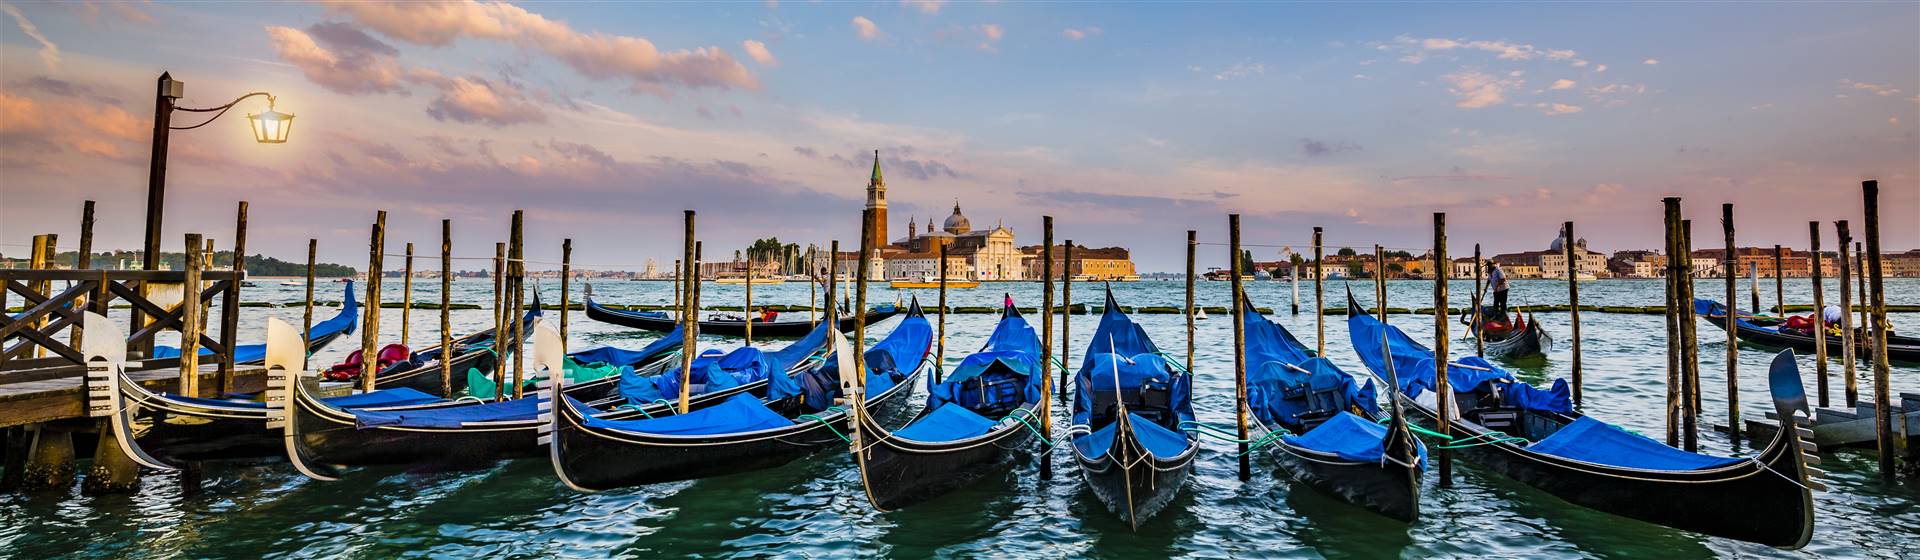 <img src="venicegondolas©shutterstock.jpeg" alt="Venice Gondolas"/>